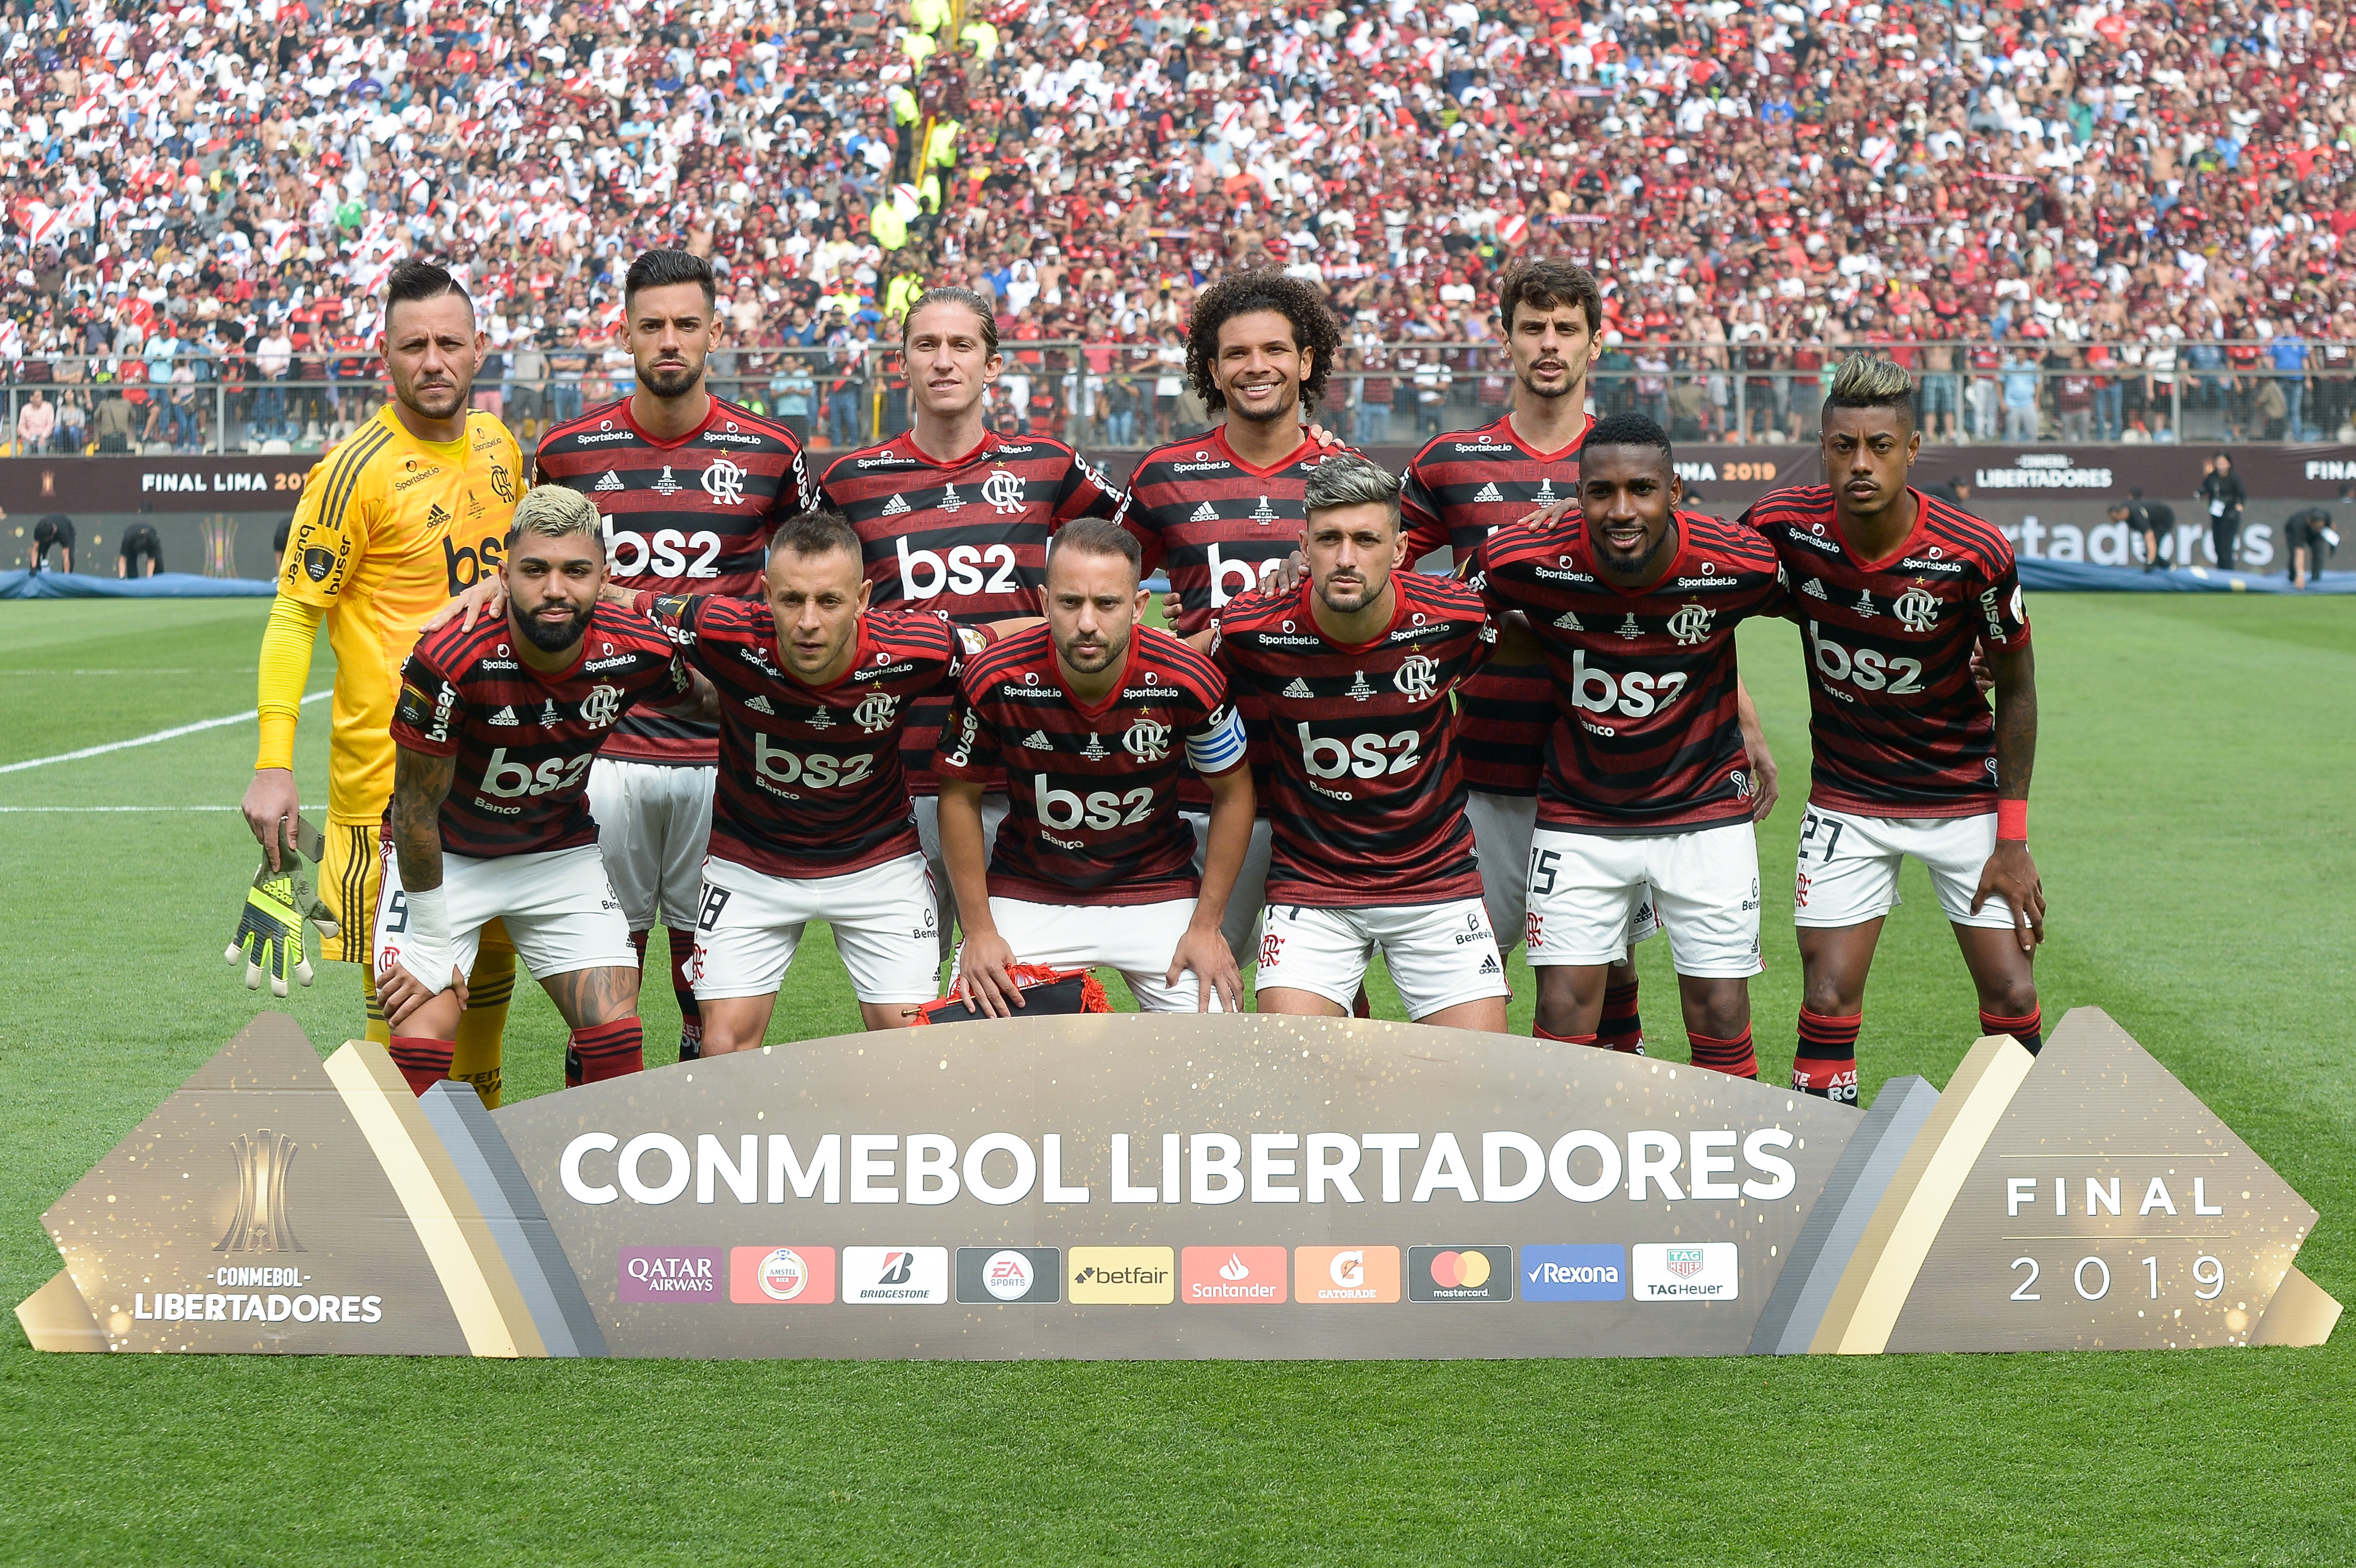 C.R.Flamengo 2 x 1 River Plate (Argentina) - 23/11/2019 - Taça Libertadores da America